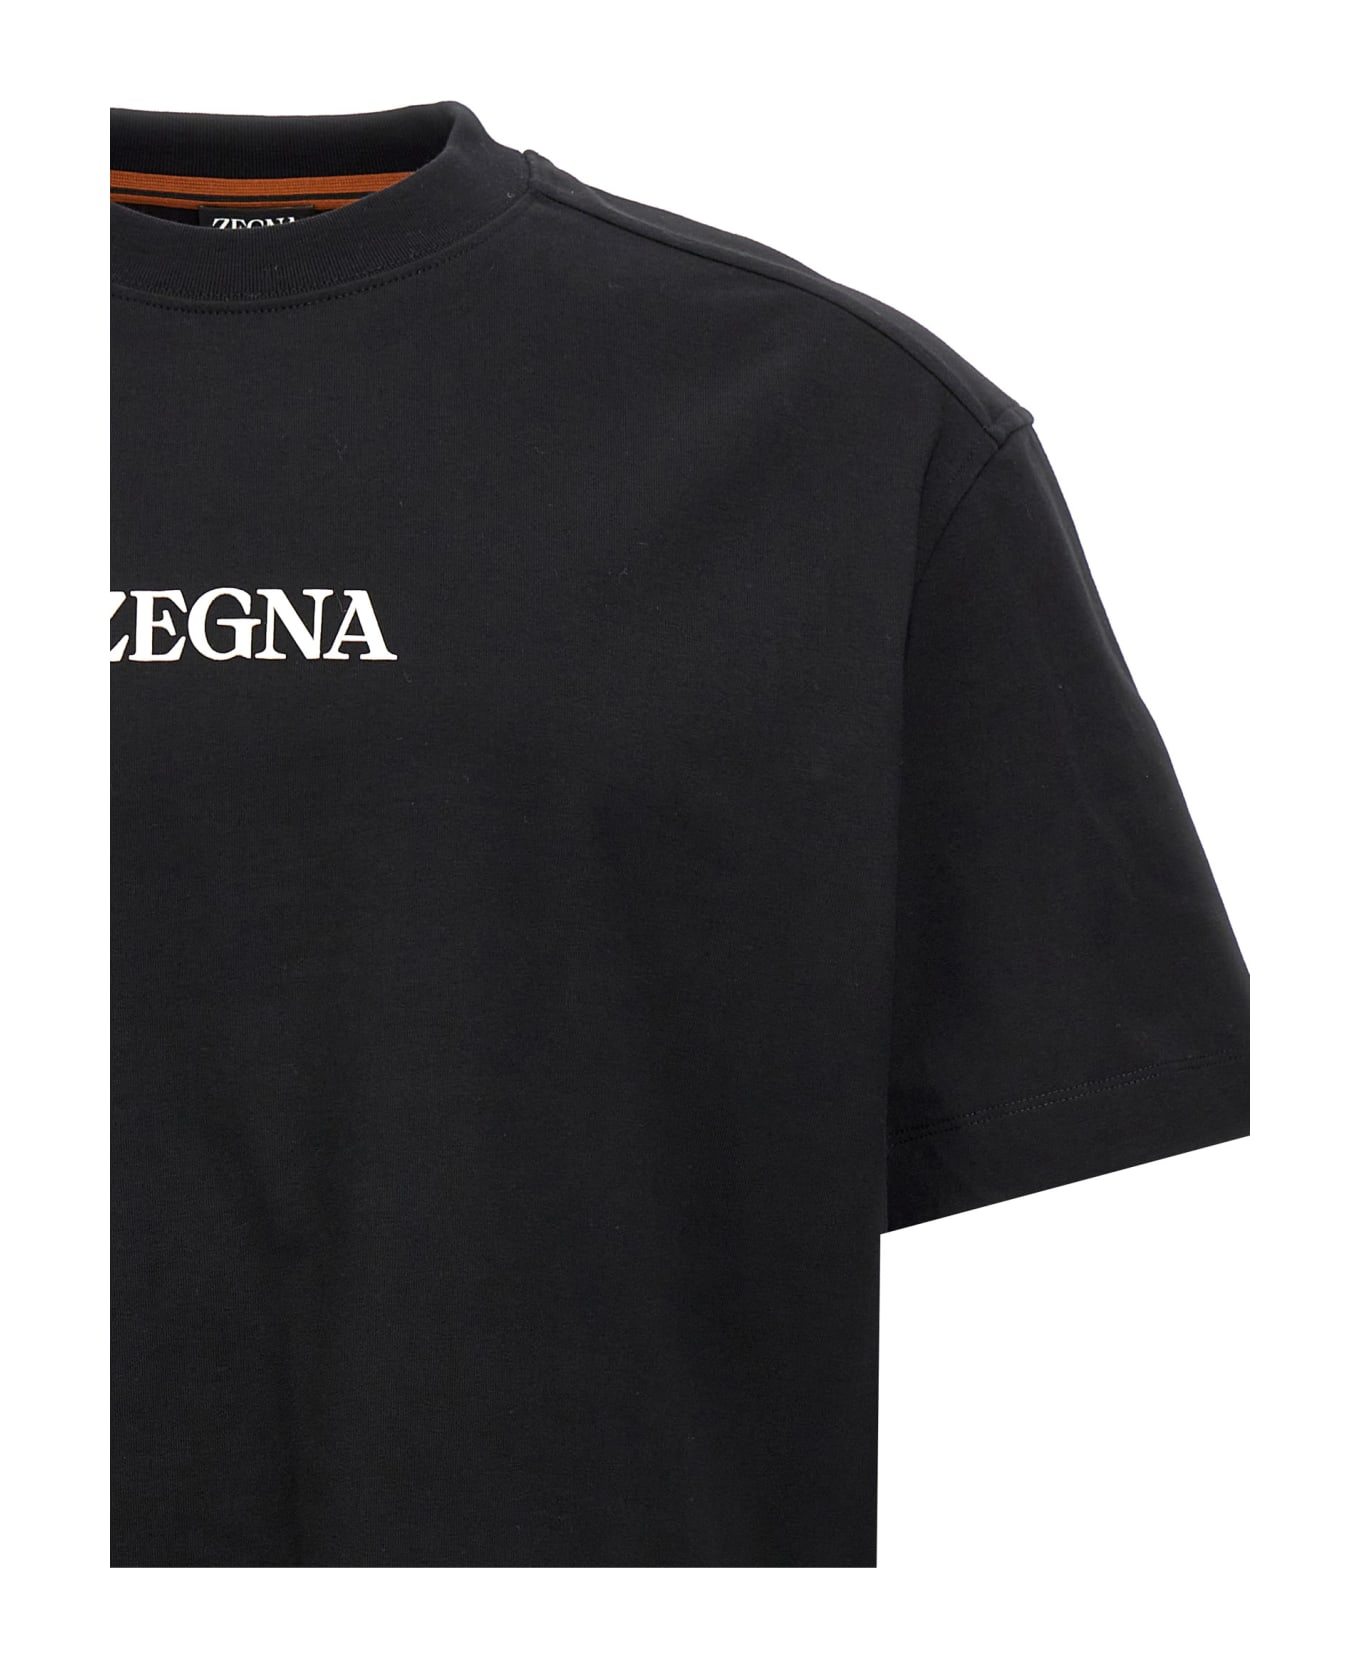 Zegna Rubberized Logo T-shirt - White/Black